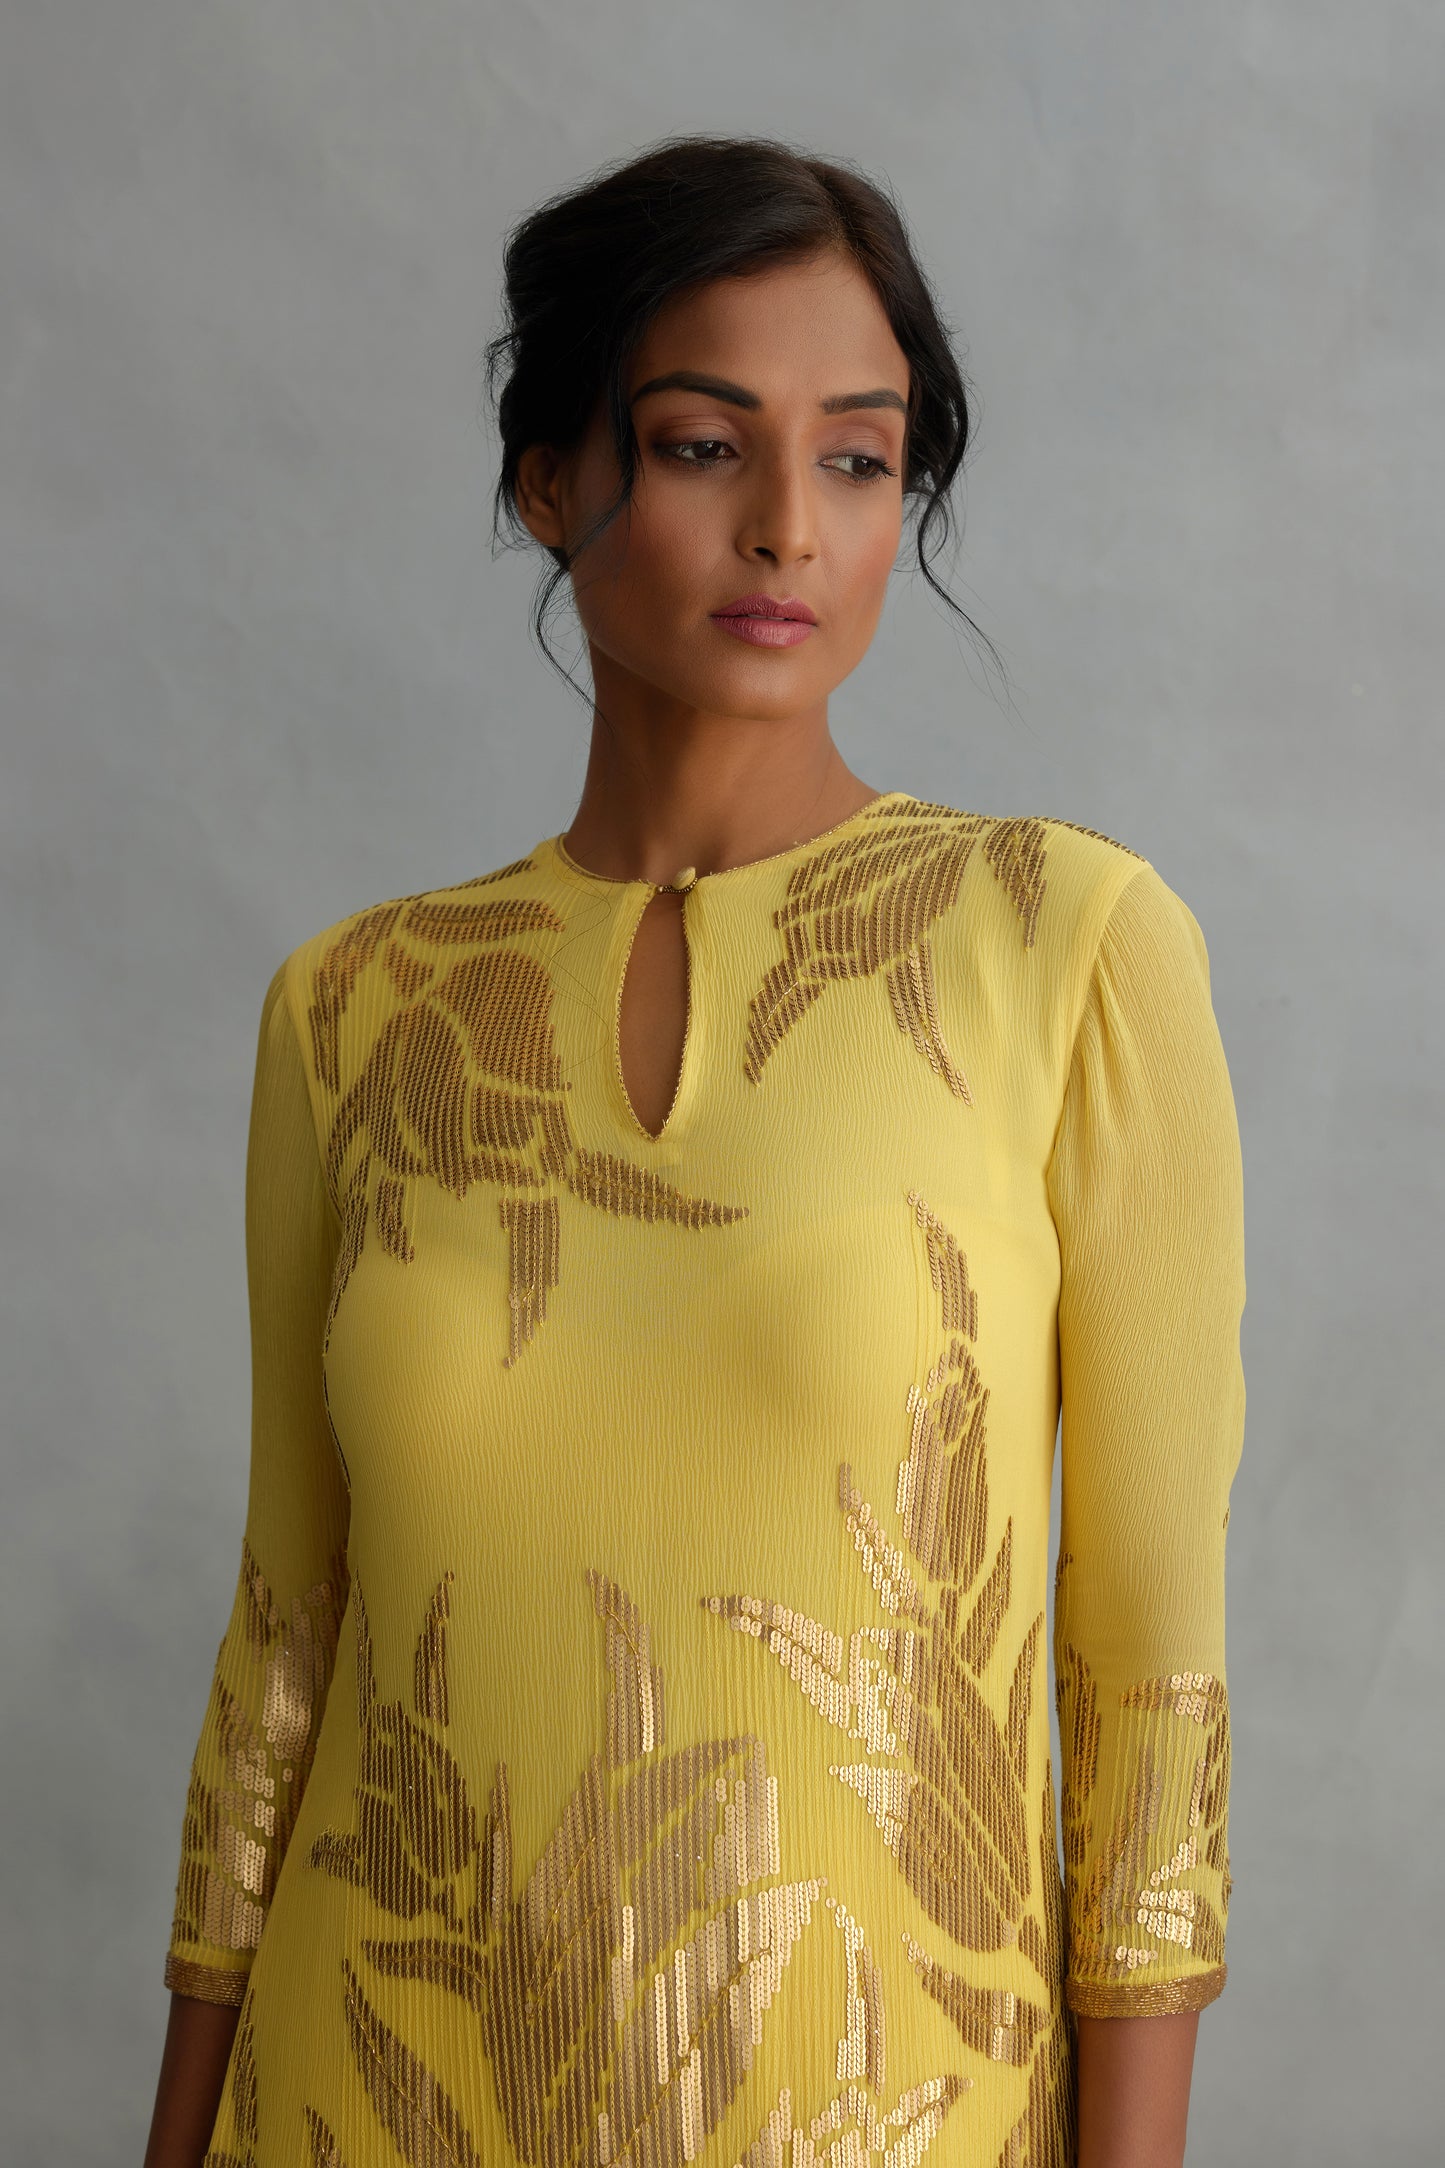 Gharara Set in Lotus design sequin embroidery